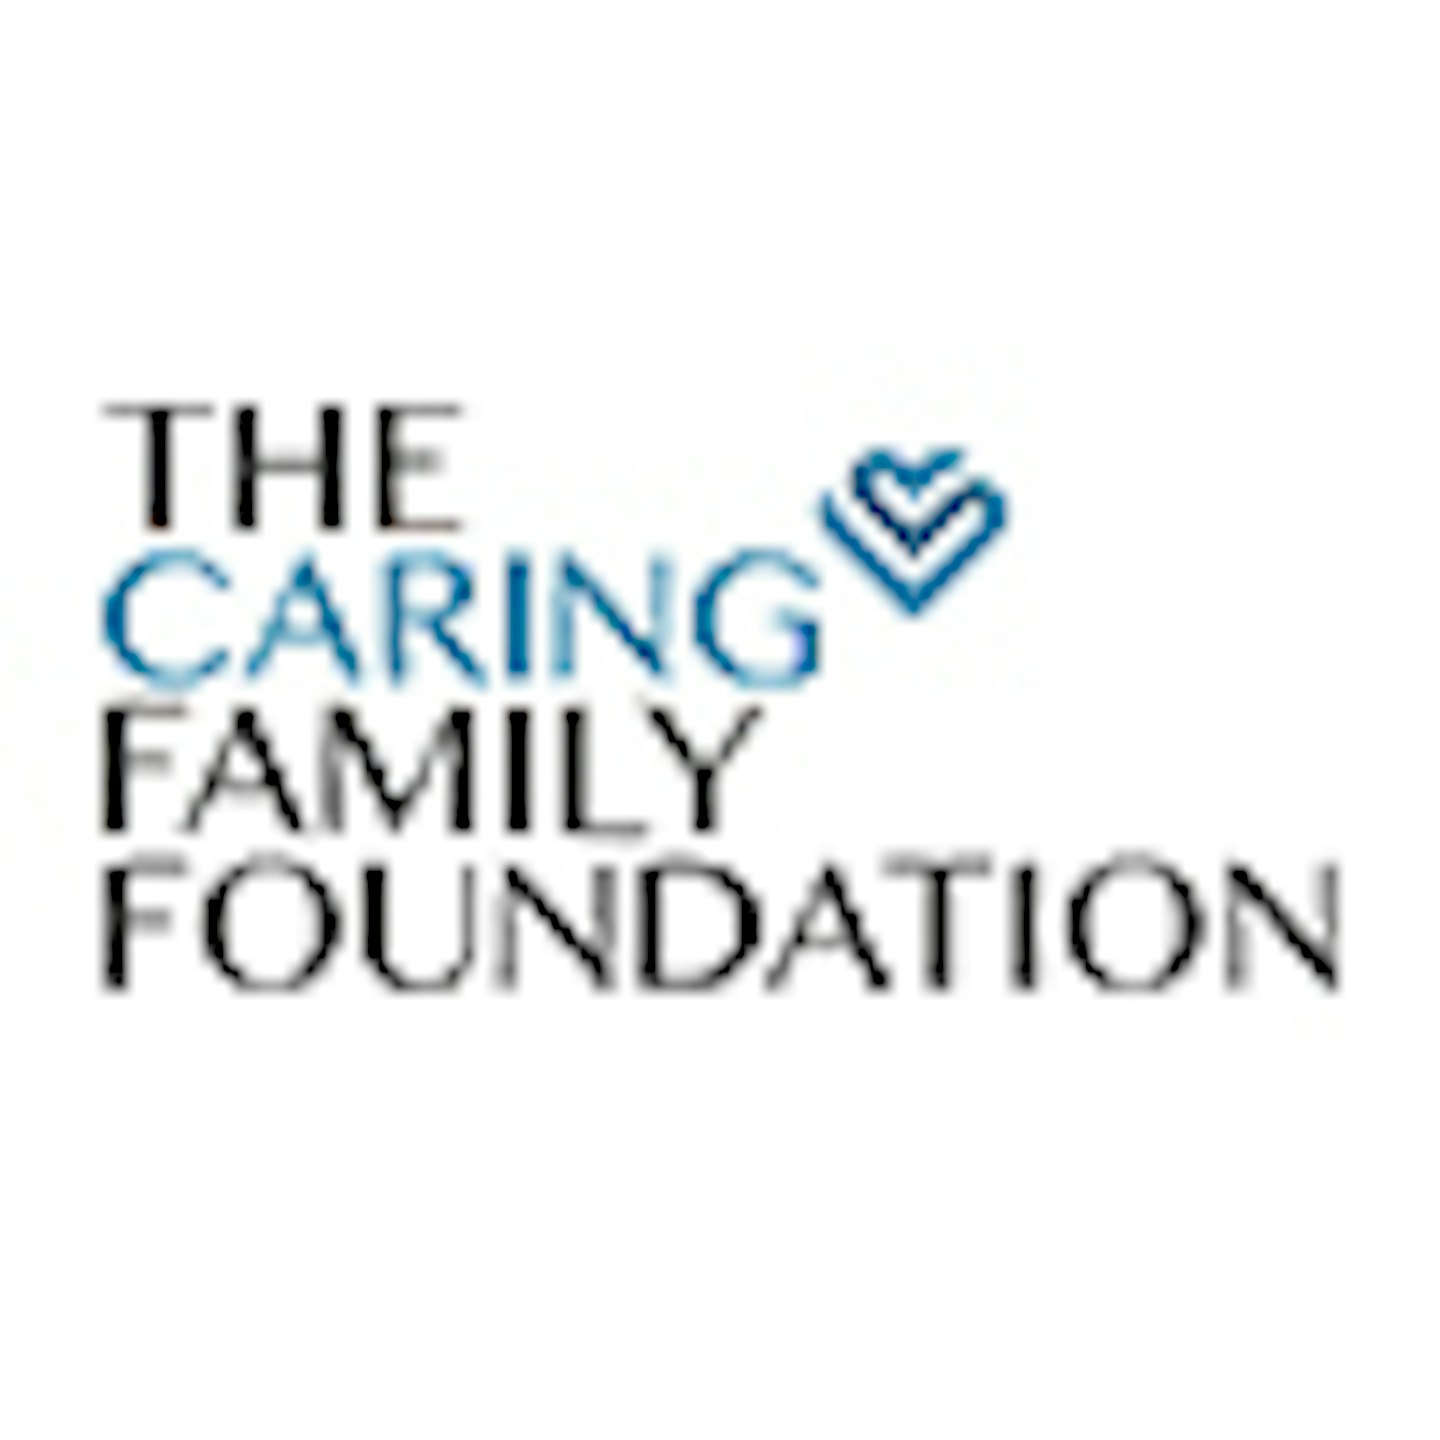 The Caring Family Foundation logo